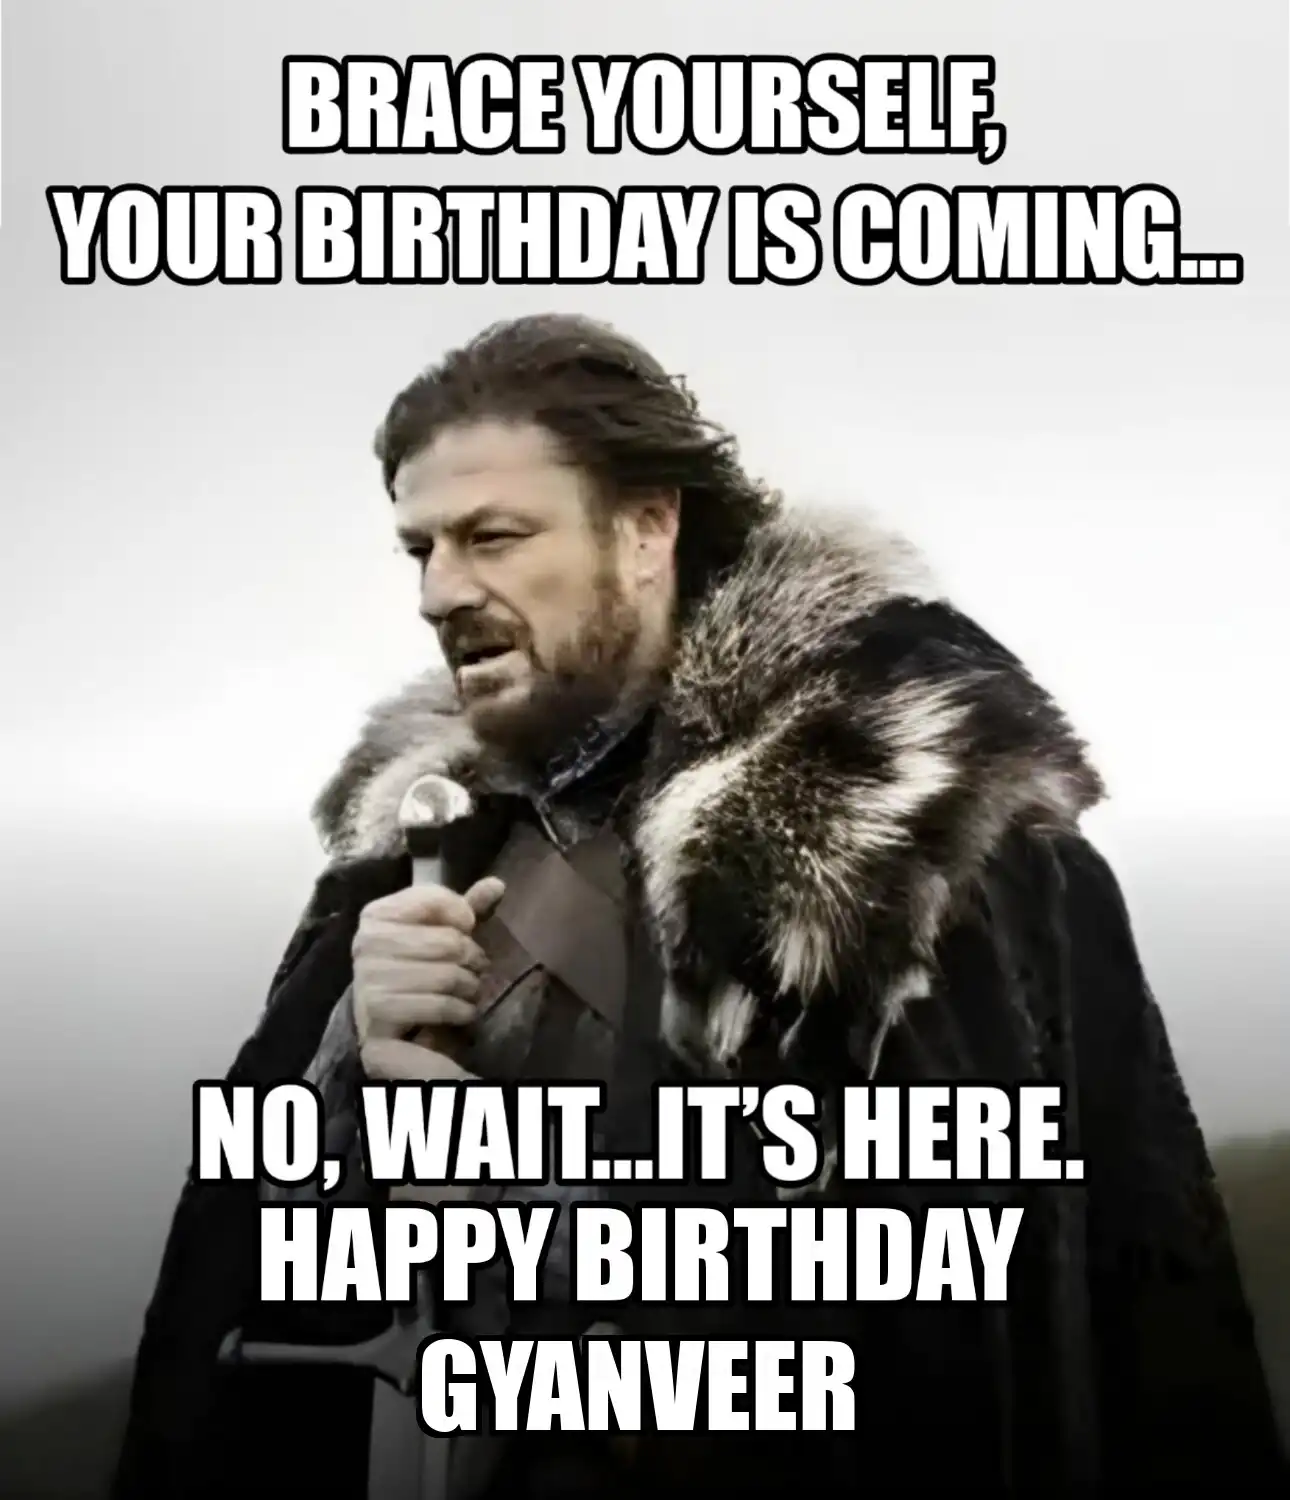 Happy Birthday Gyanveer Brace Yourself Your Birthday Is Coming Meme